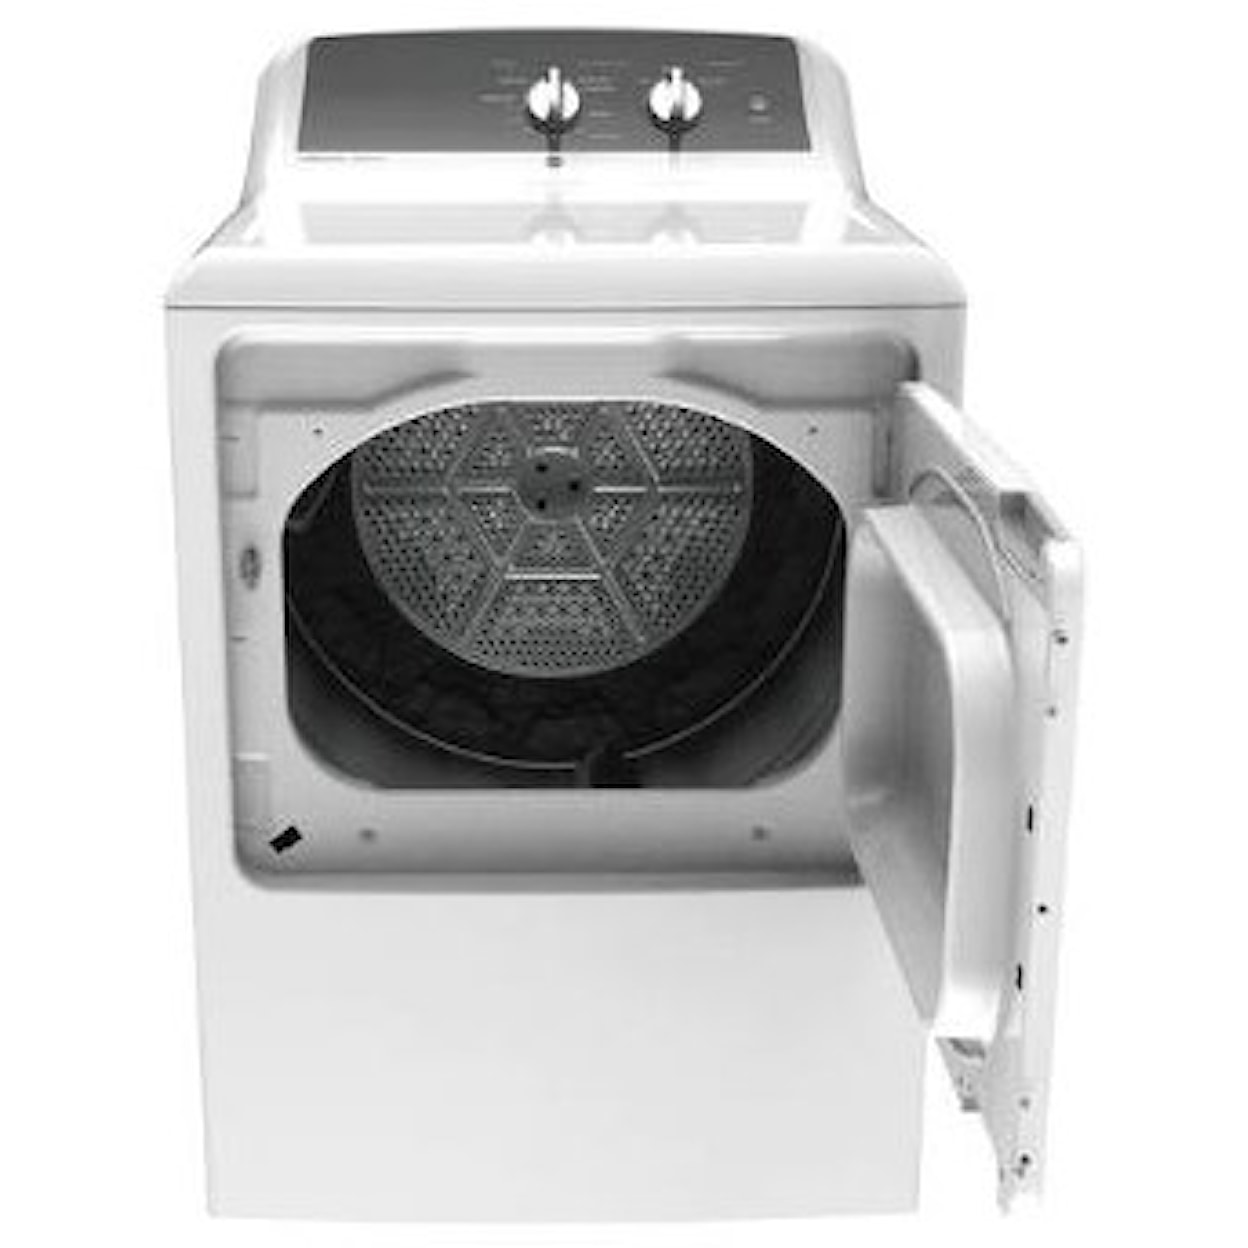 GE Appliances Electric Dryers - GE 6.2 Cu. Ft. Capacity Dryer